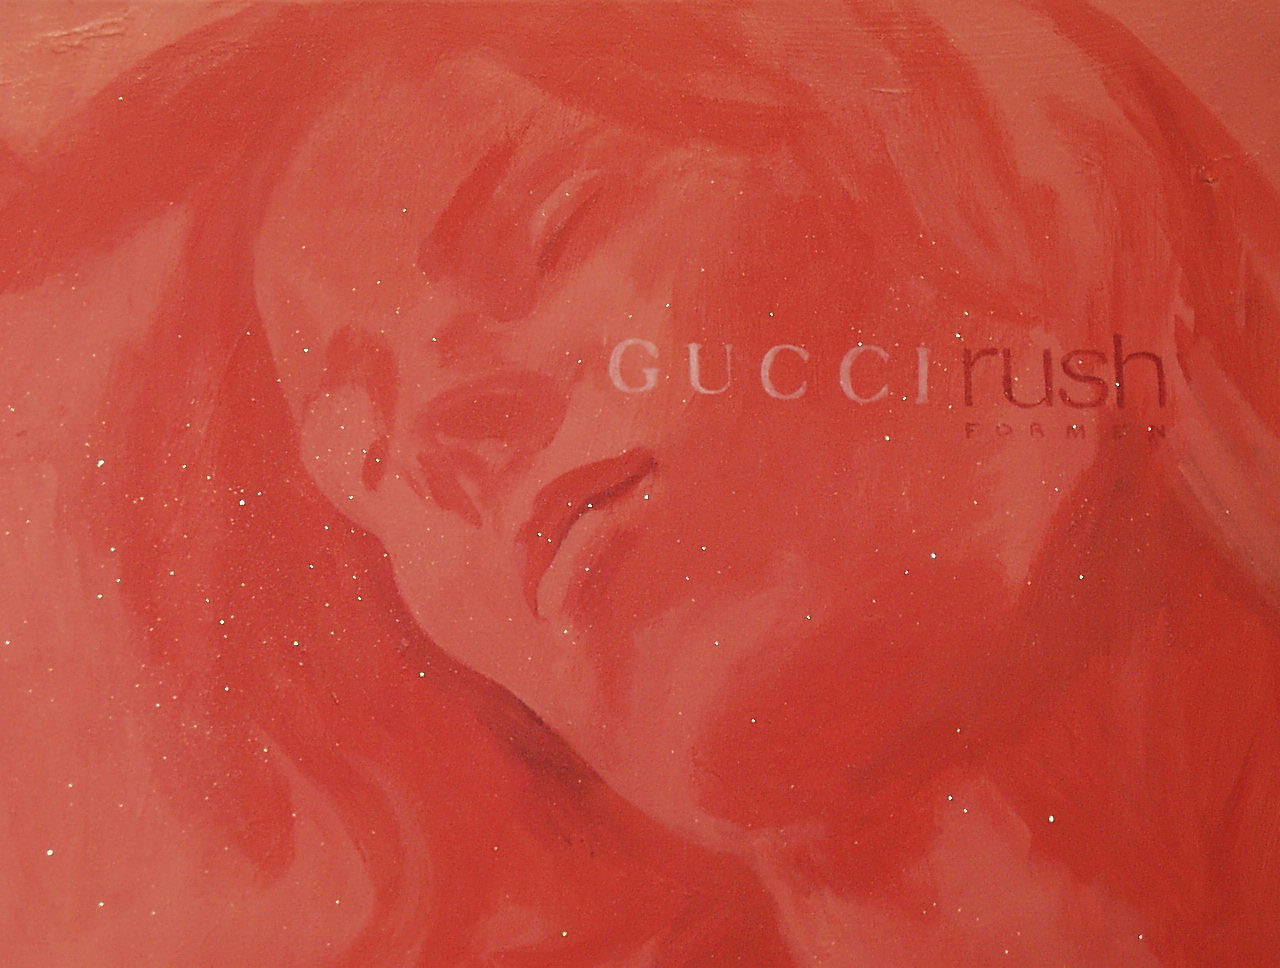 Agnieszka Brzeżańska - Gucci-Rush (Oil on Canvas | Größe: 106 x 76 cm | Preis: 13000 PLN)